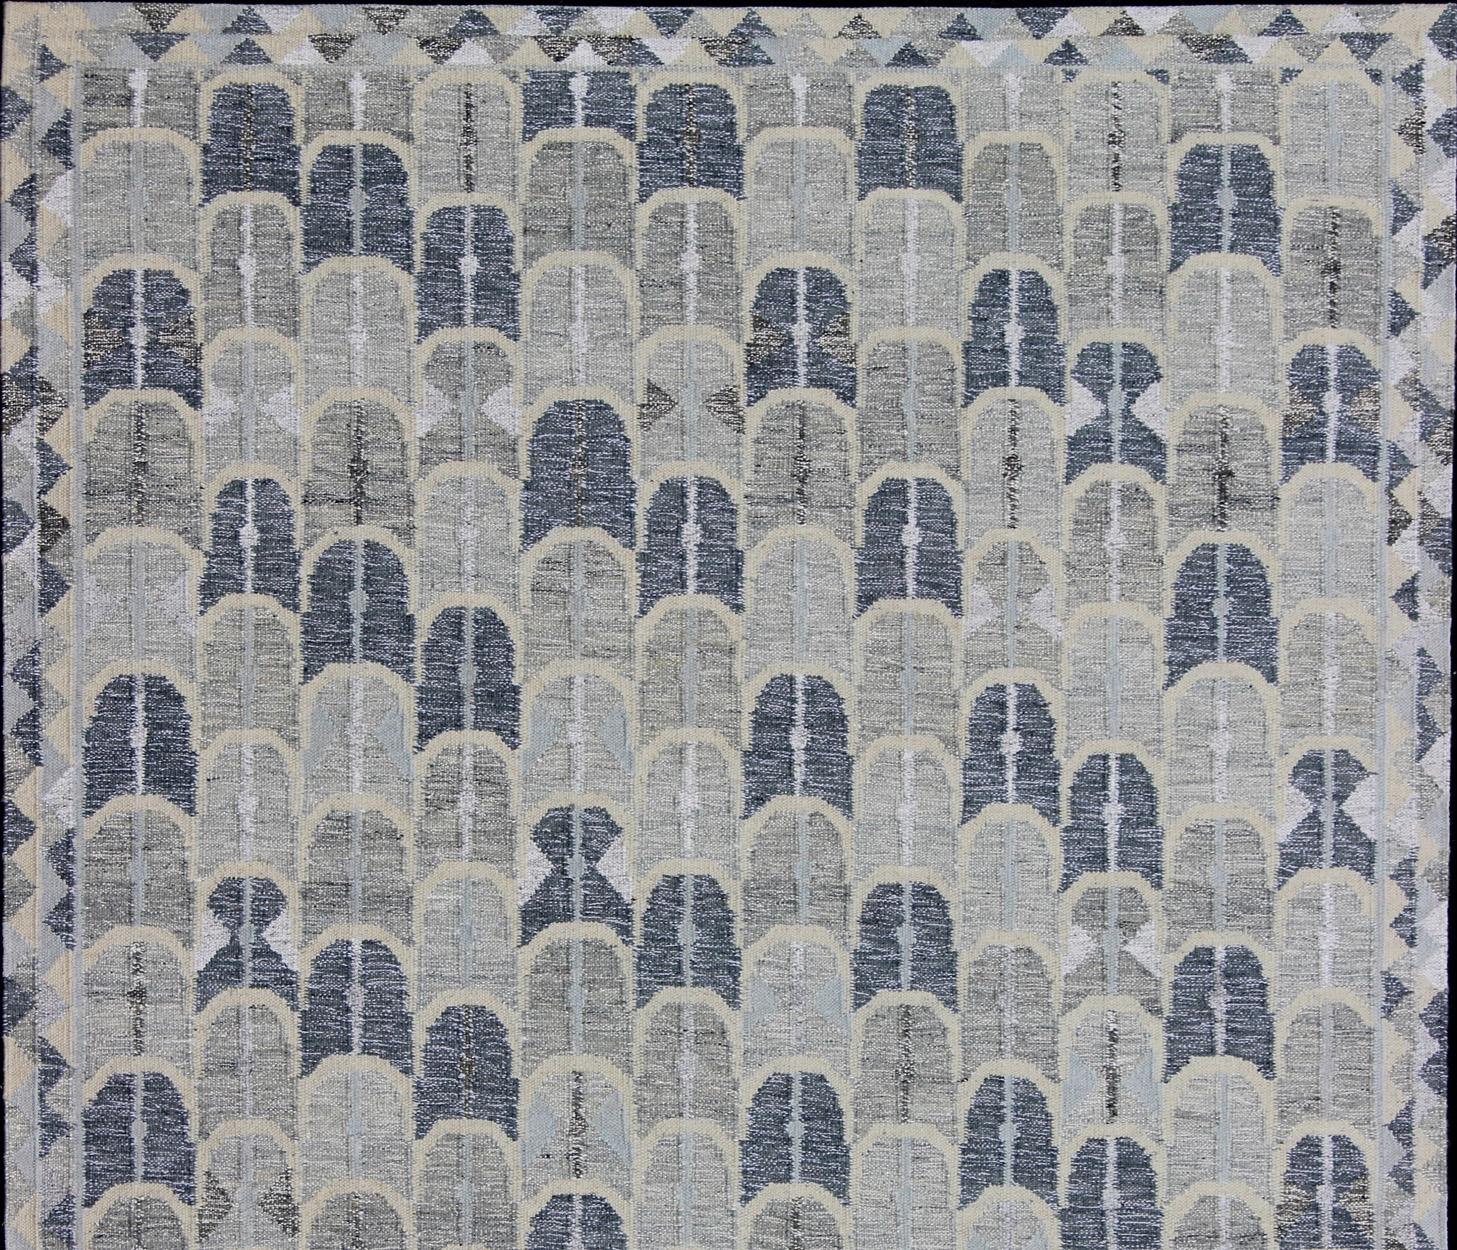 Contemporary Scandinavian design flat-weave rug in blue, grays and creams, rug RJK-K0010-SHB-027-04, country of origin / type: Scandinavia / Scandinavian Modern

This modern Scandinavian design flat-weave rug is inspired by the work of Swedish